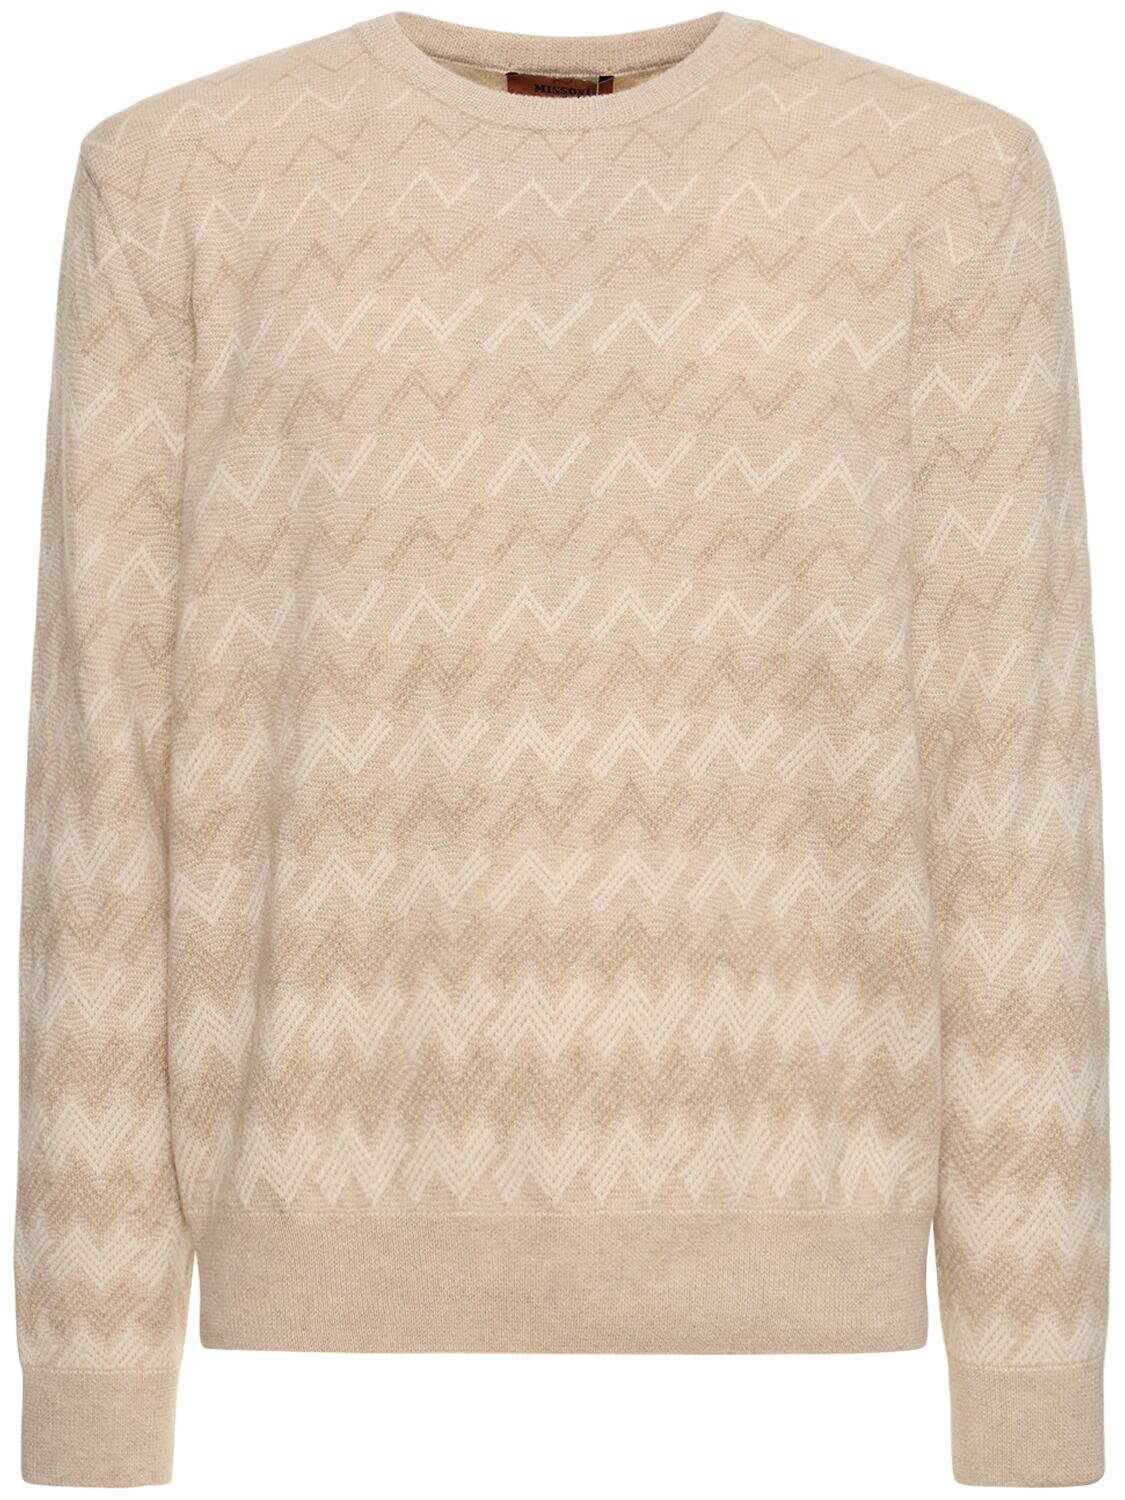 Monogram Cashmere Knit Sweater